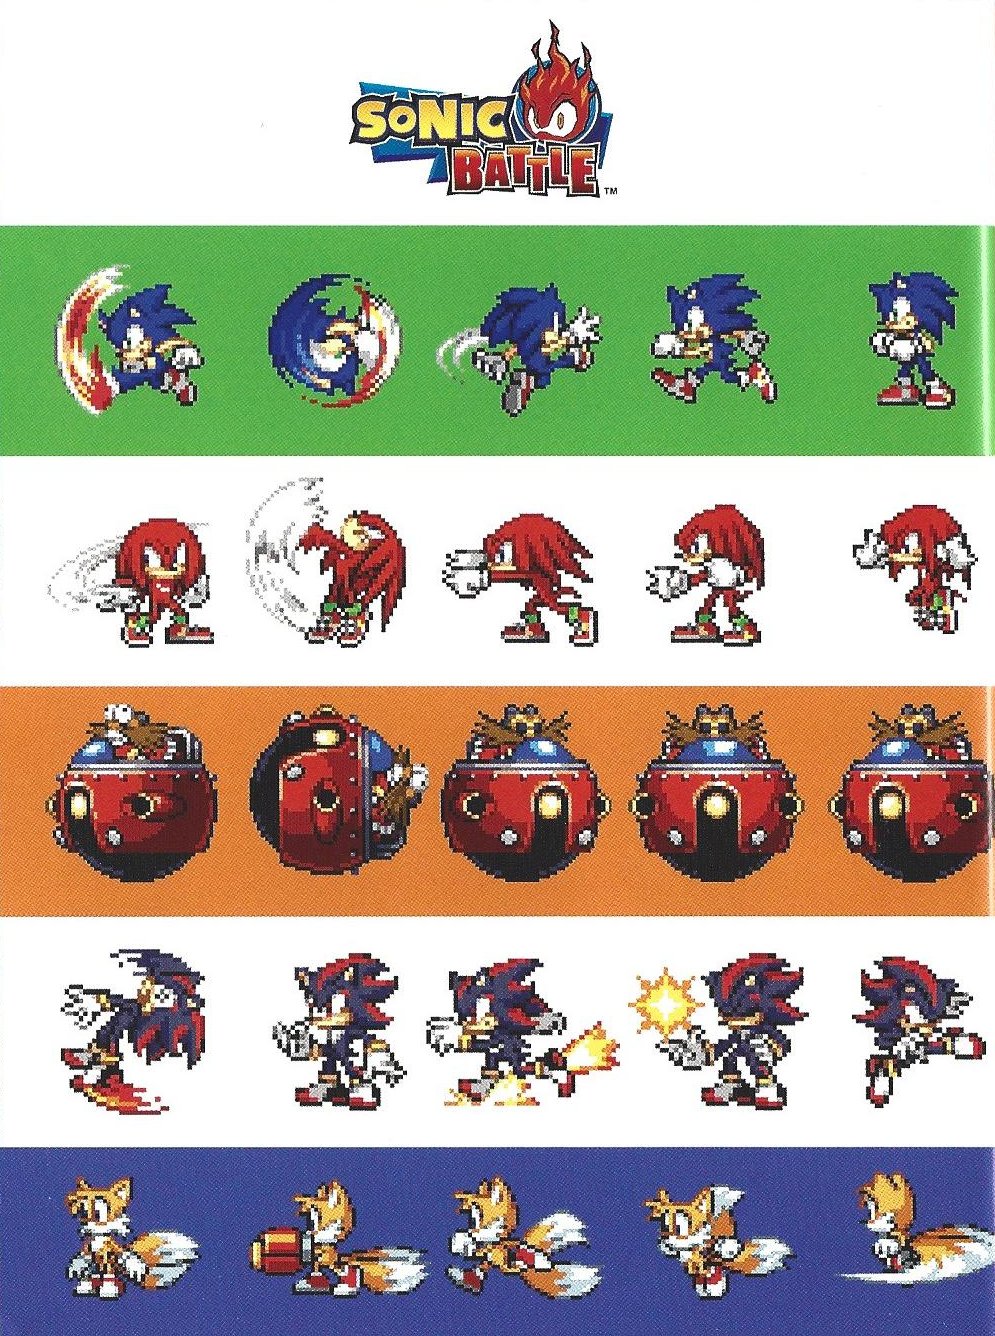 Sonic the Hedgehog News, Media, & Updates on X: Sonic Adventure 2: Battle  Nintendo GameCube official promotional art. #SonicTheHedgehog   / X